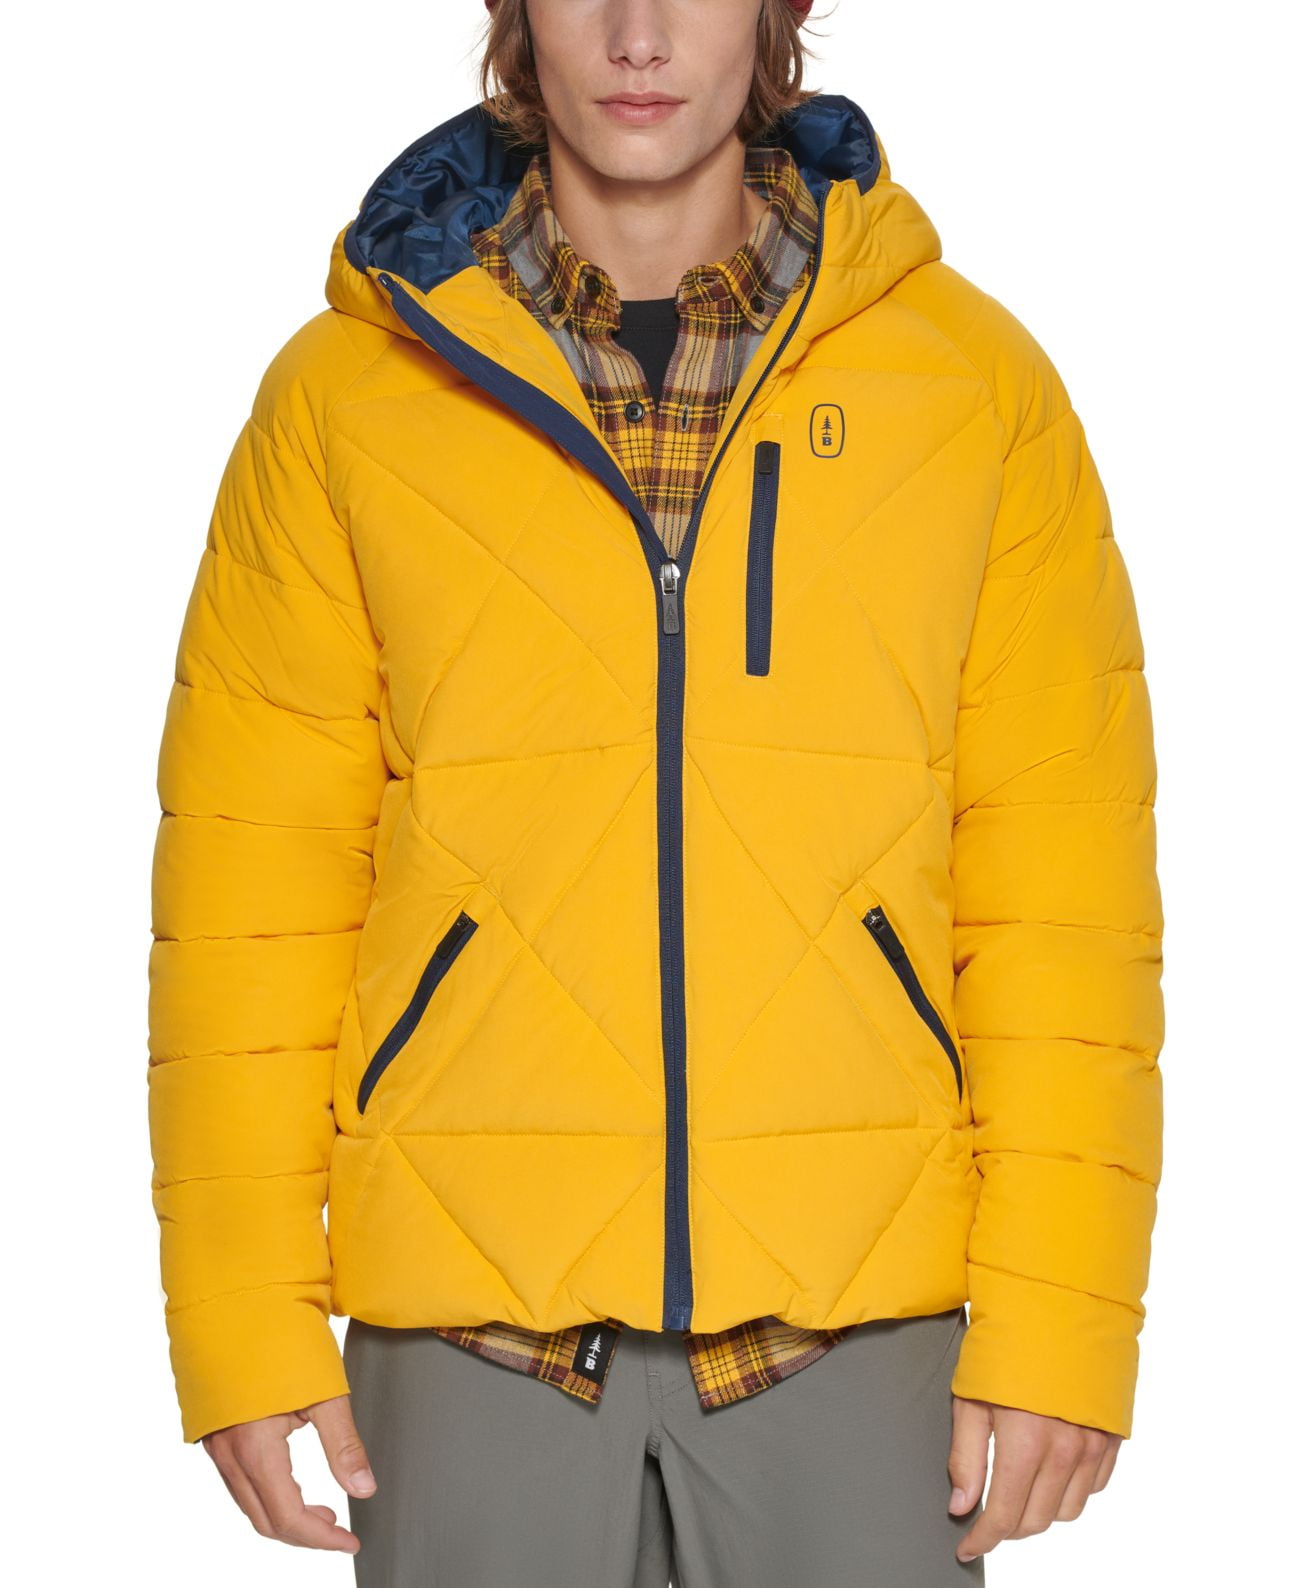 Bass Outdoor Men's Glacier Hiking Jacket Yellow Size XL 